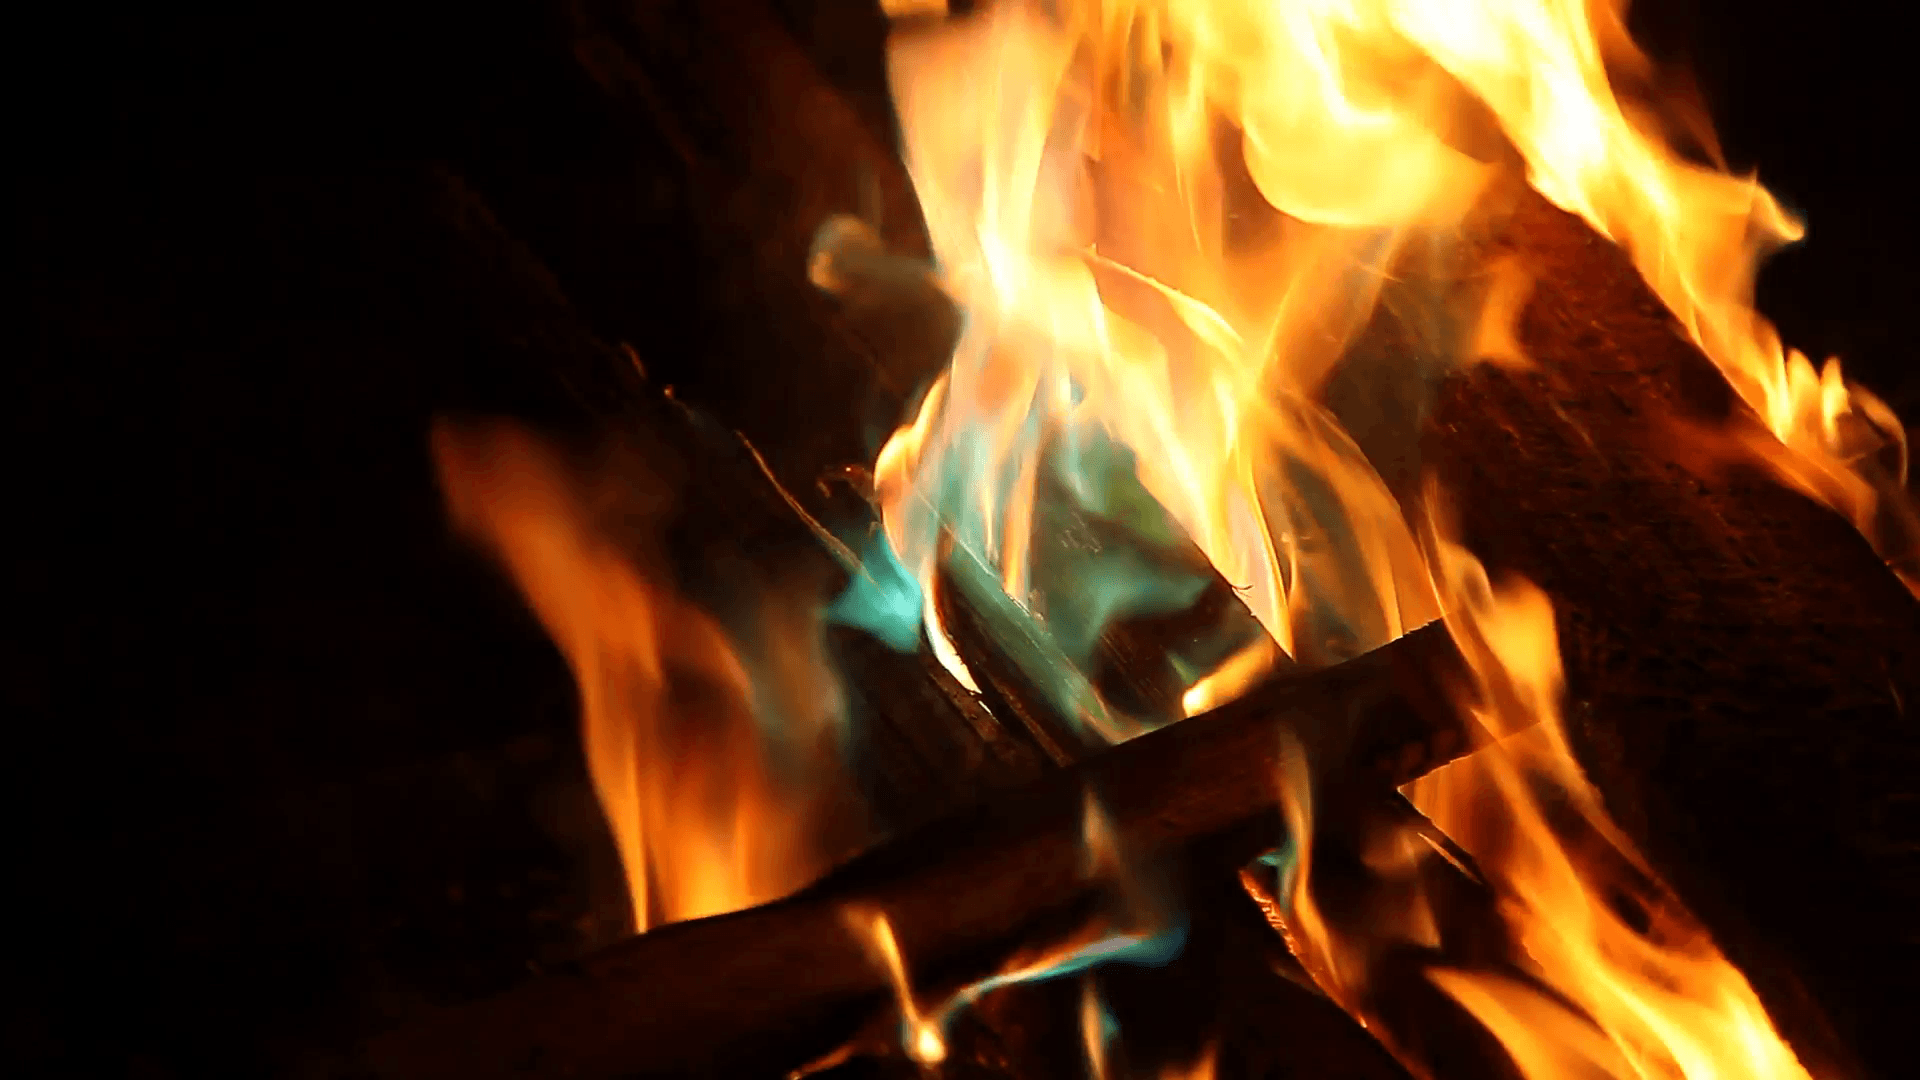 blur night fire flame orange background Stock Video Footage